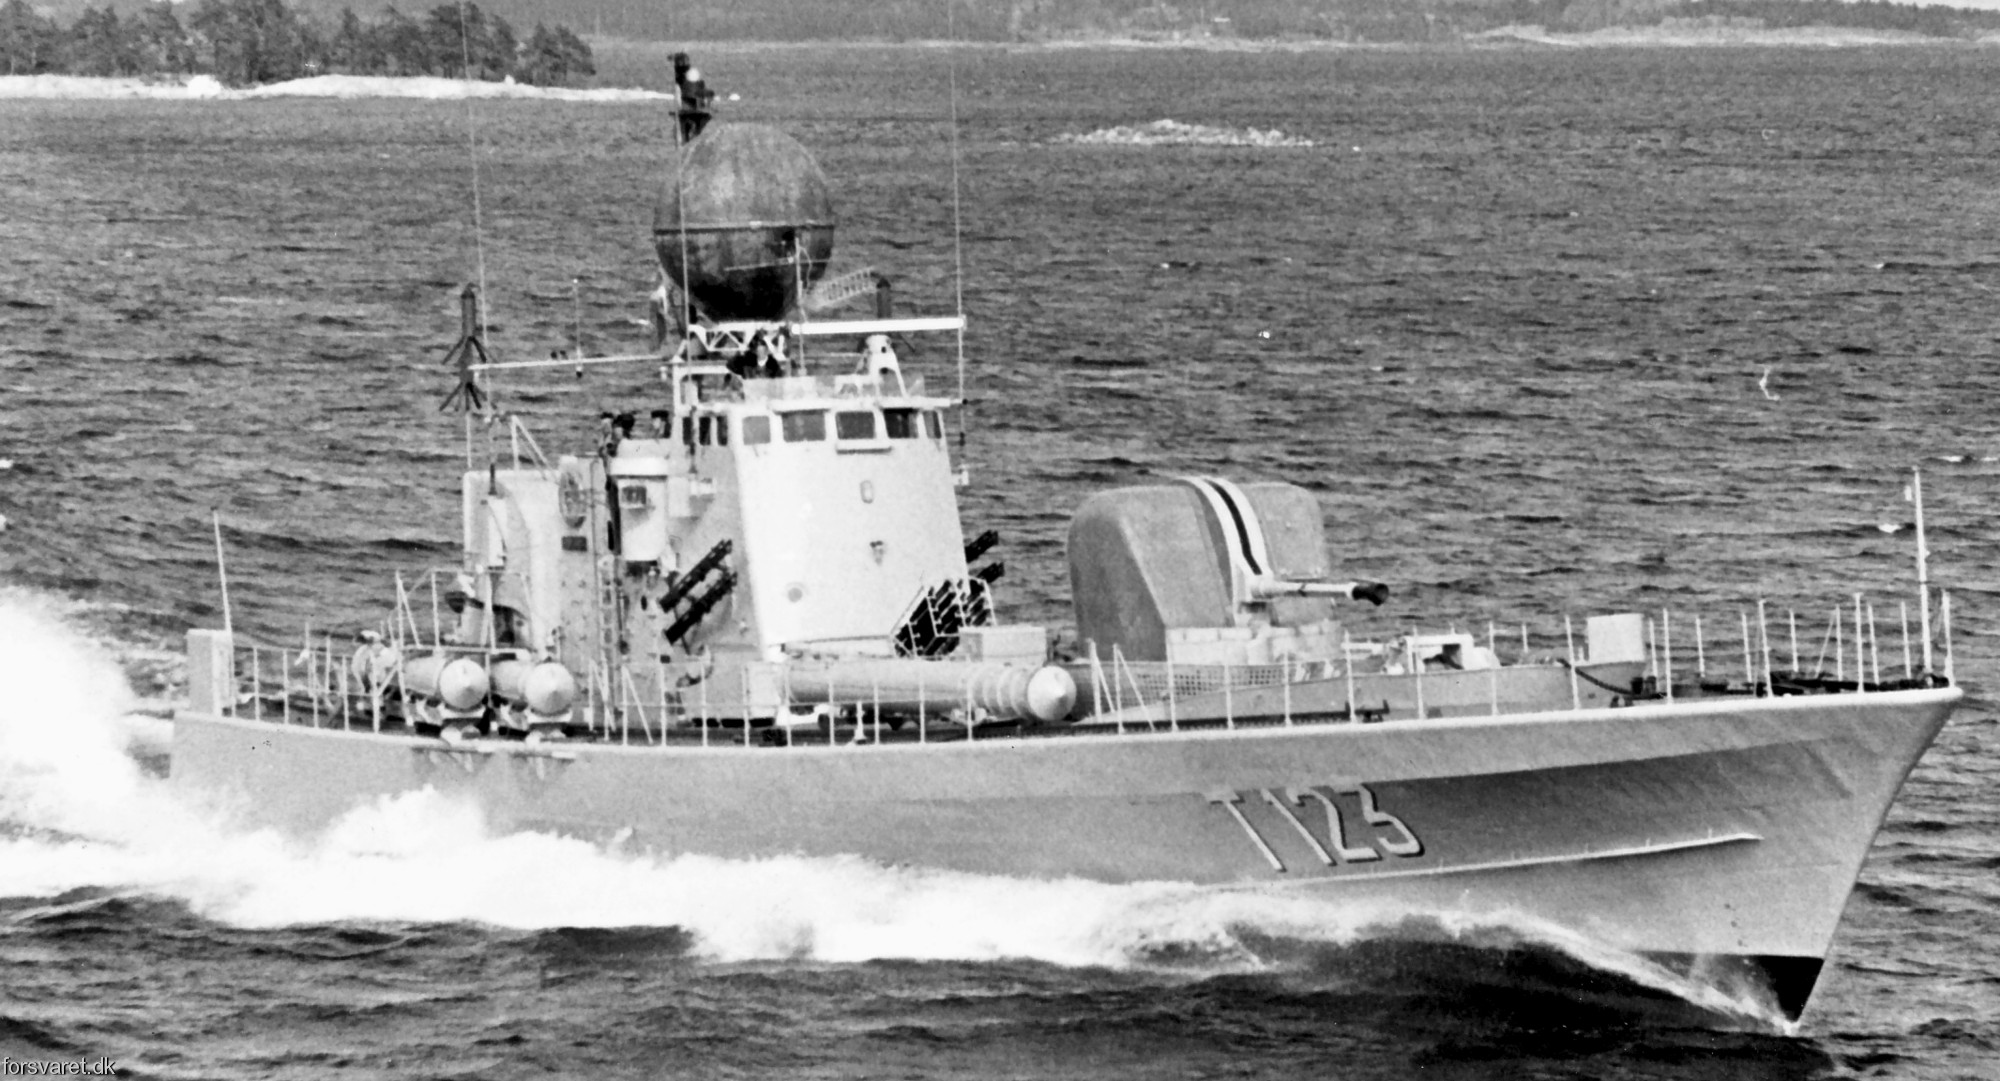 t123 capella hswms hms spica class fast attack craft torpedo boat vessel swedish navy svenska marinen 06